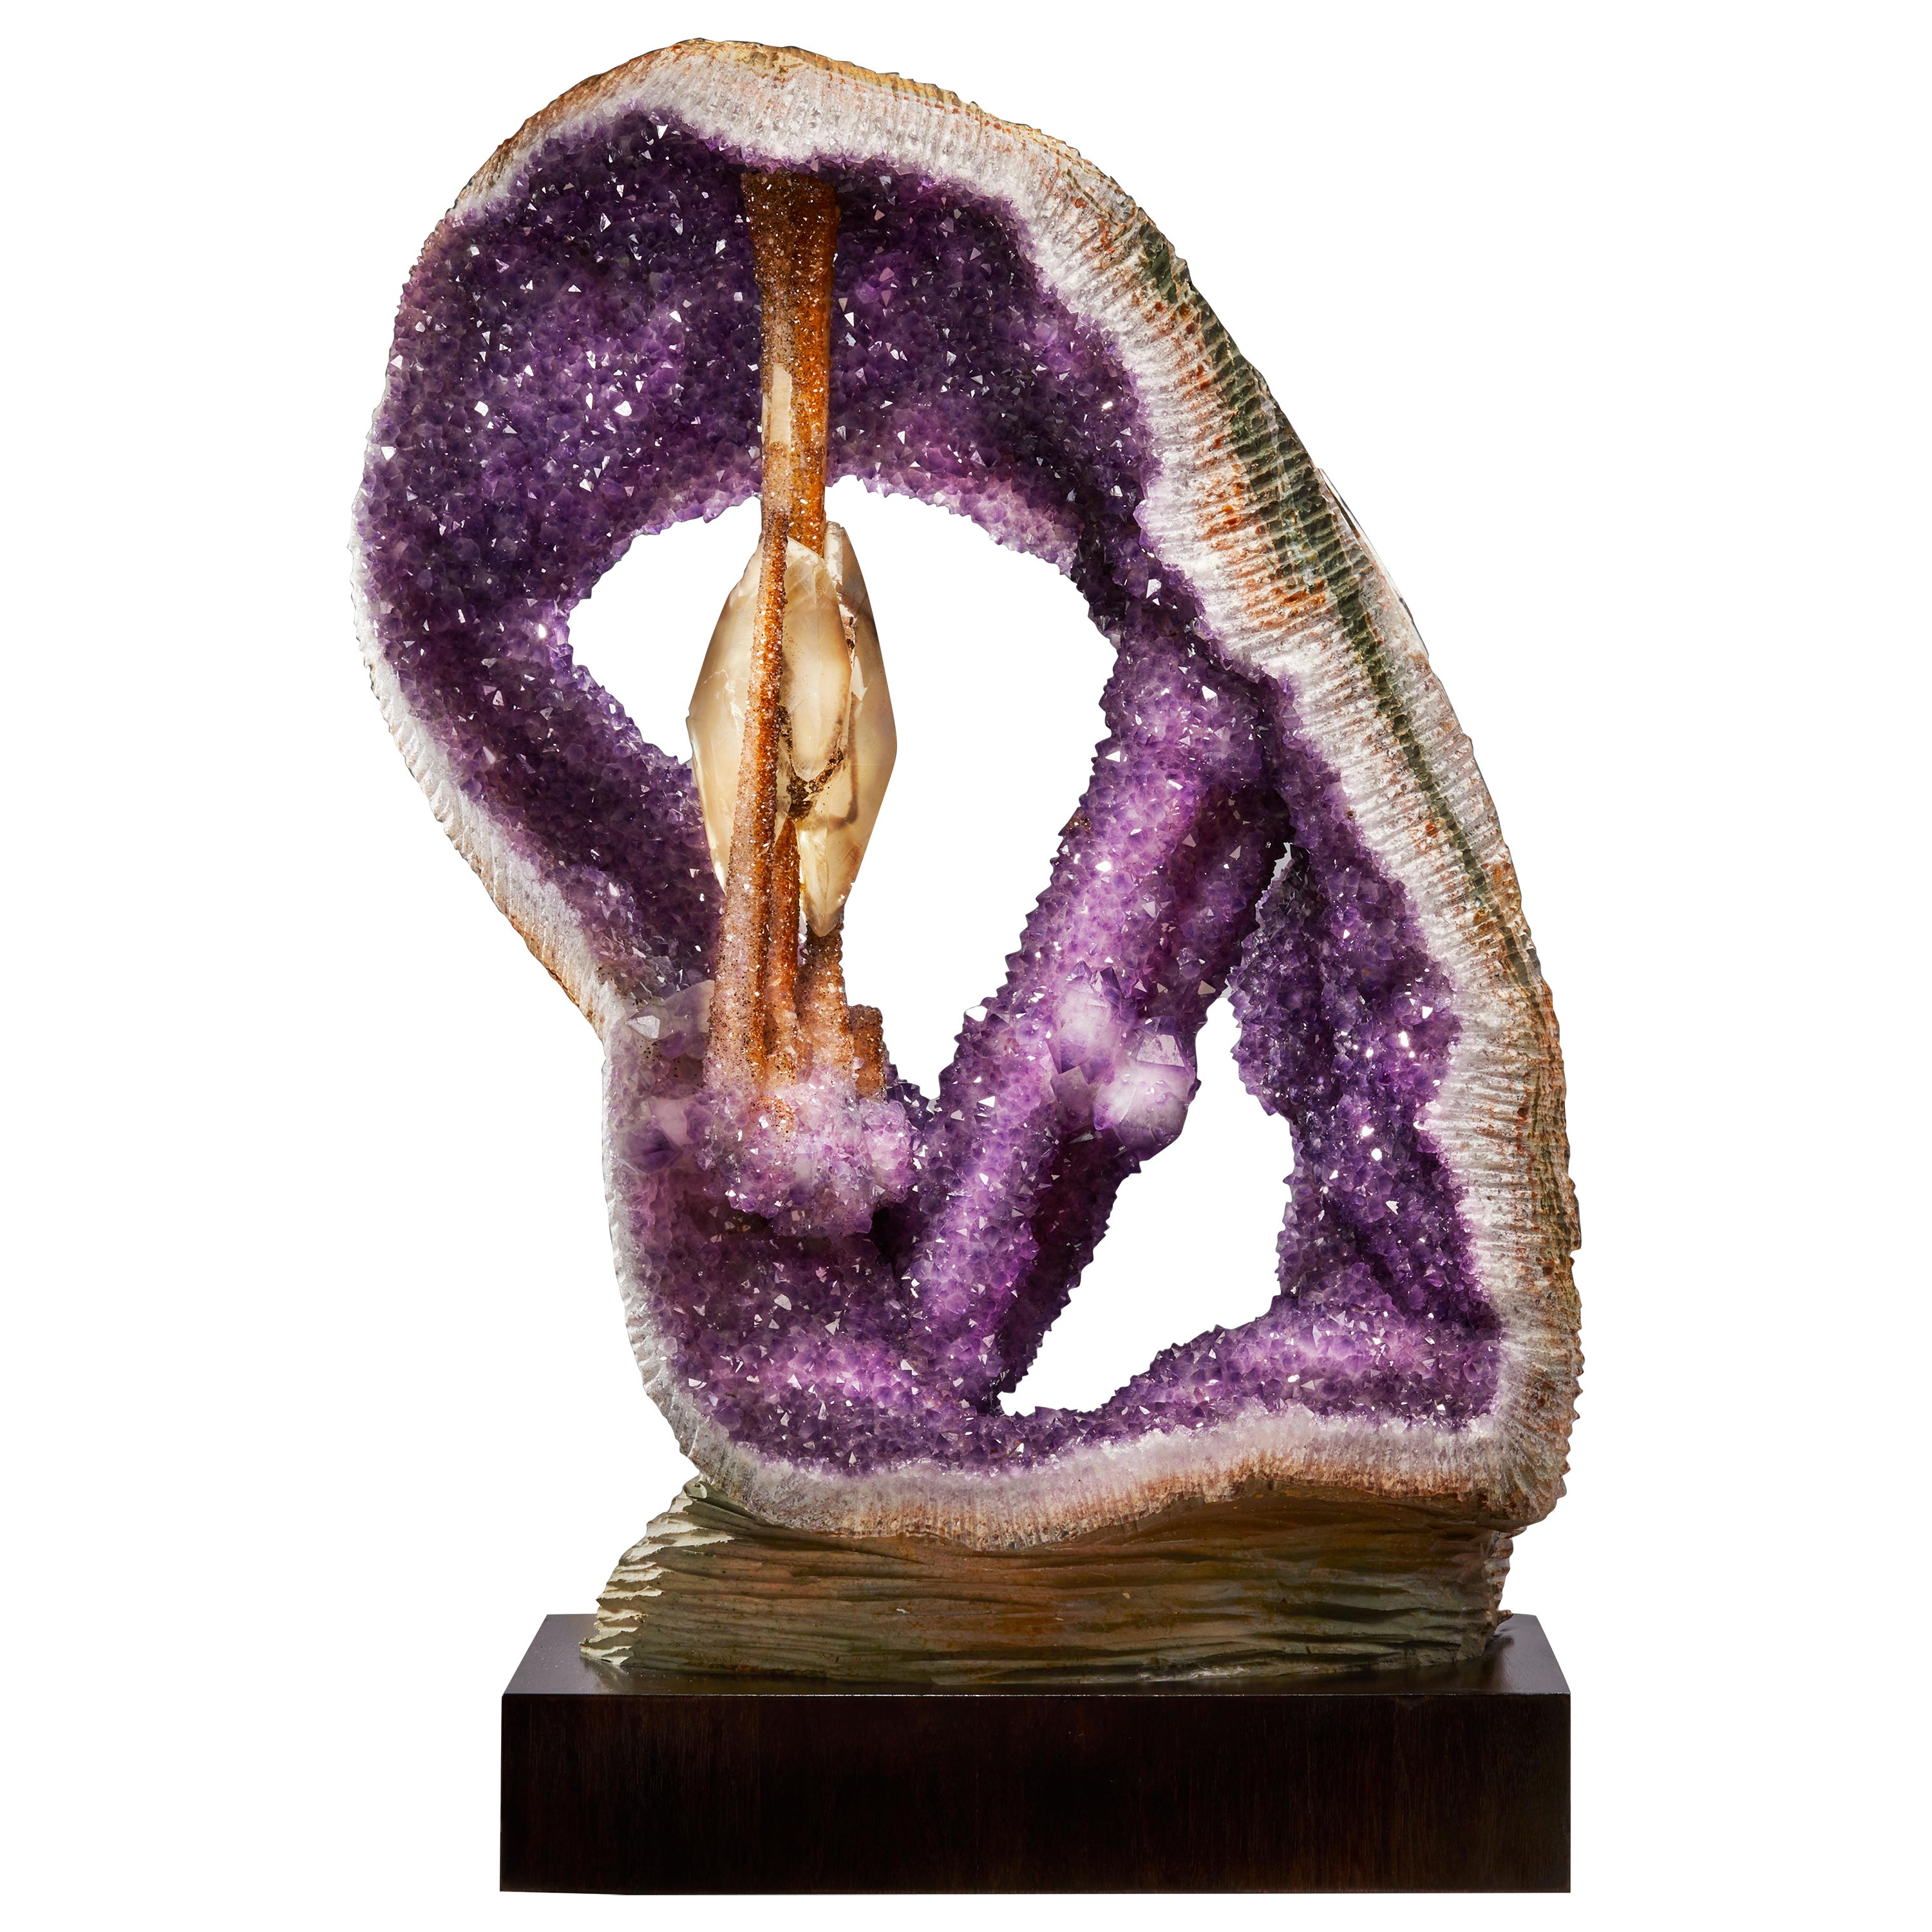 Amethyst “Harp" with phantom calcites